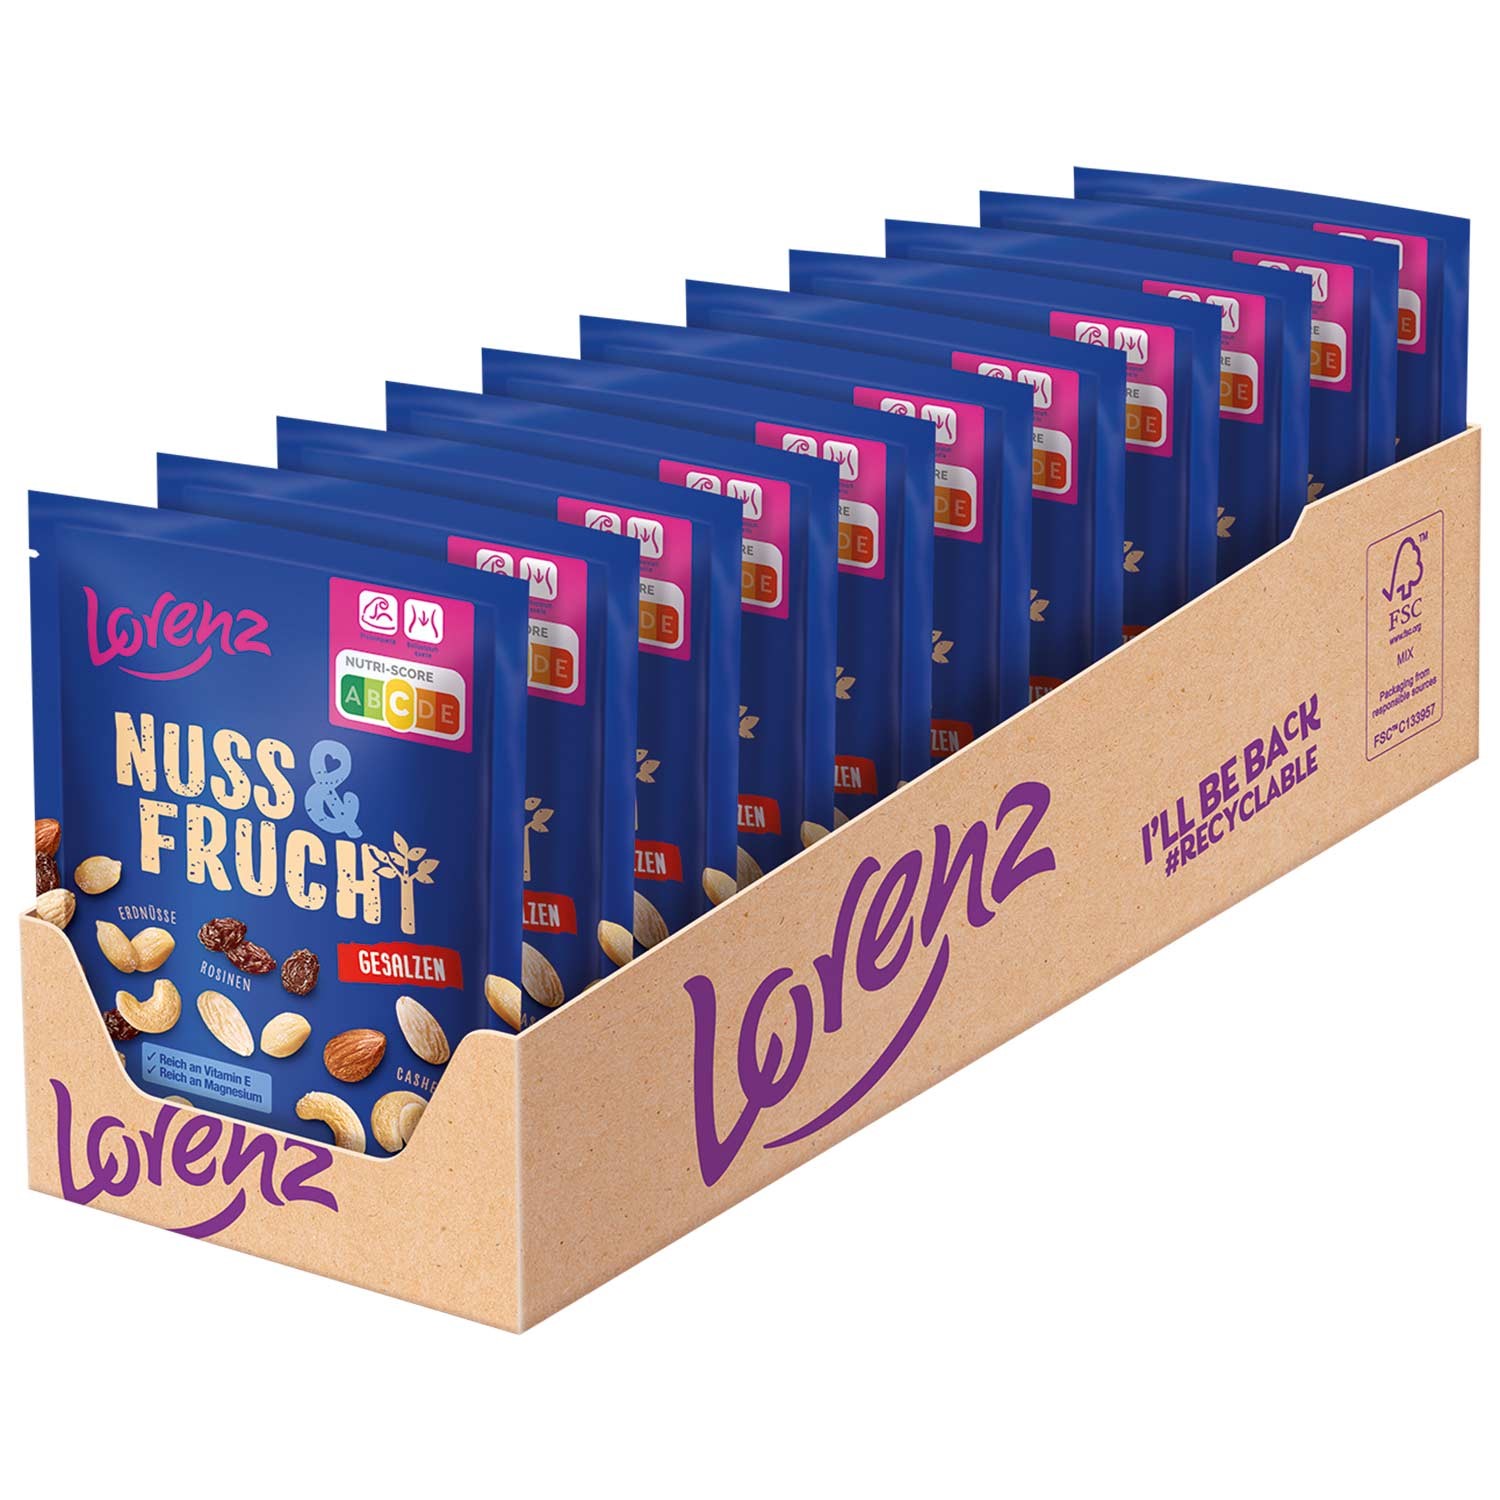 Lorenz Nuss & Frucht gesalzen 125G Mandeln-Nüsse-Cashews-Rosinen